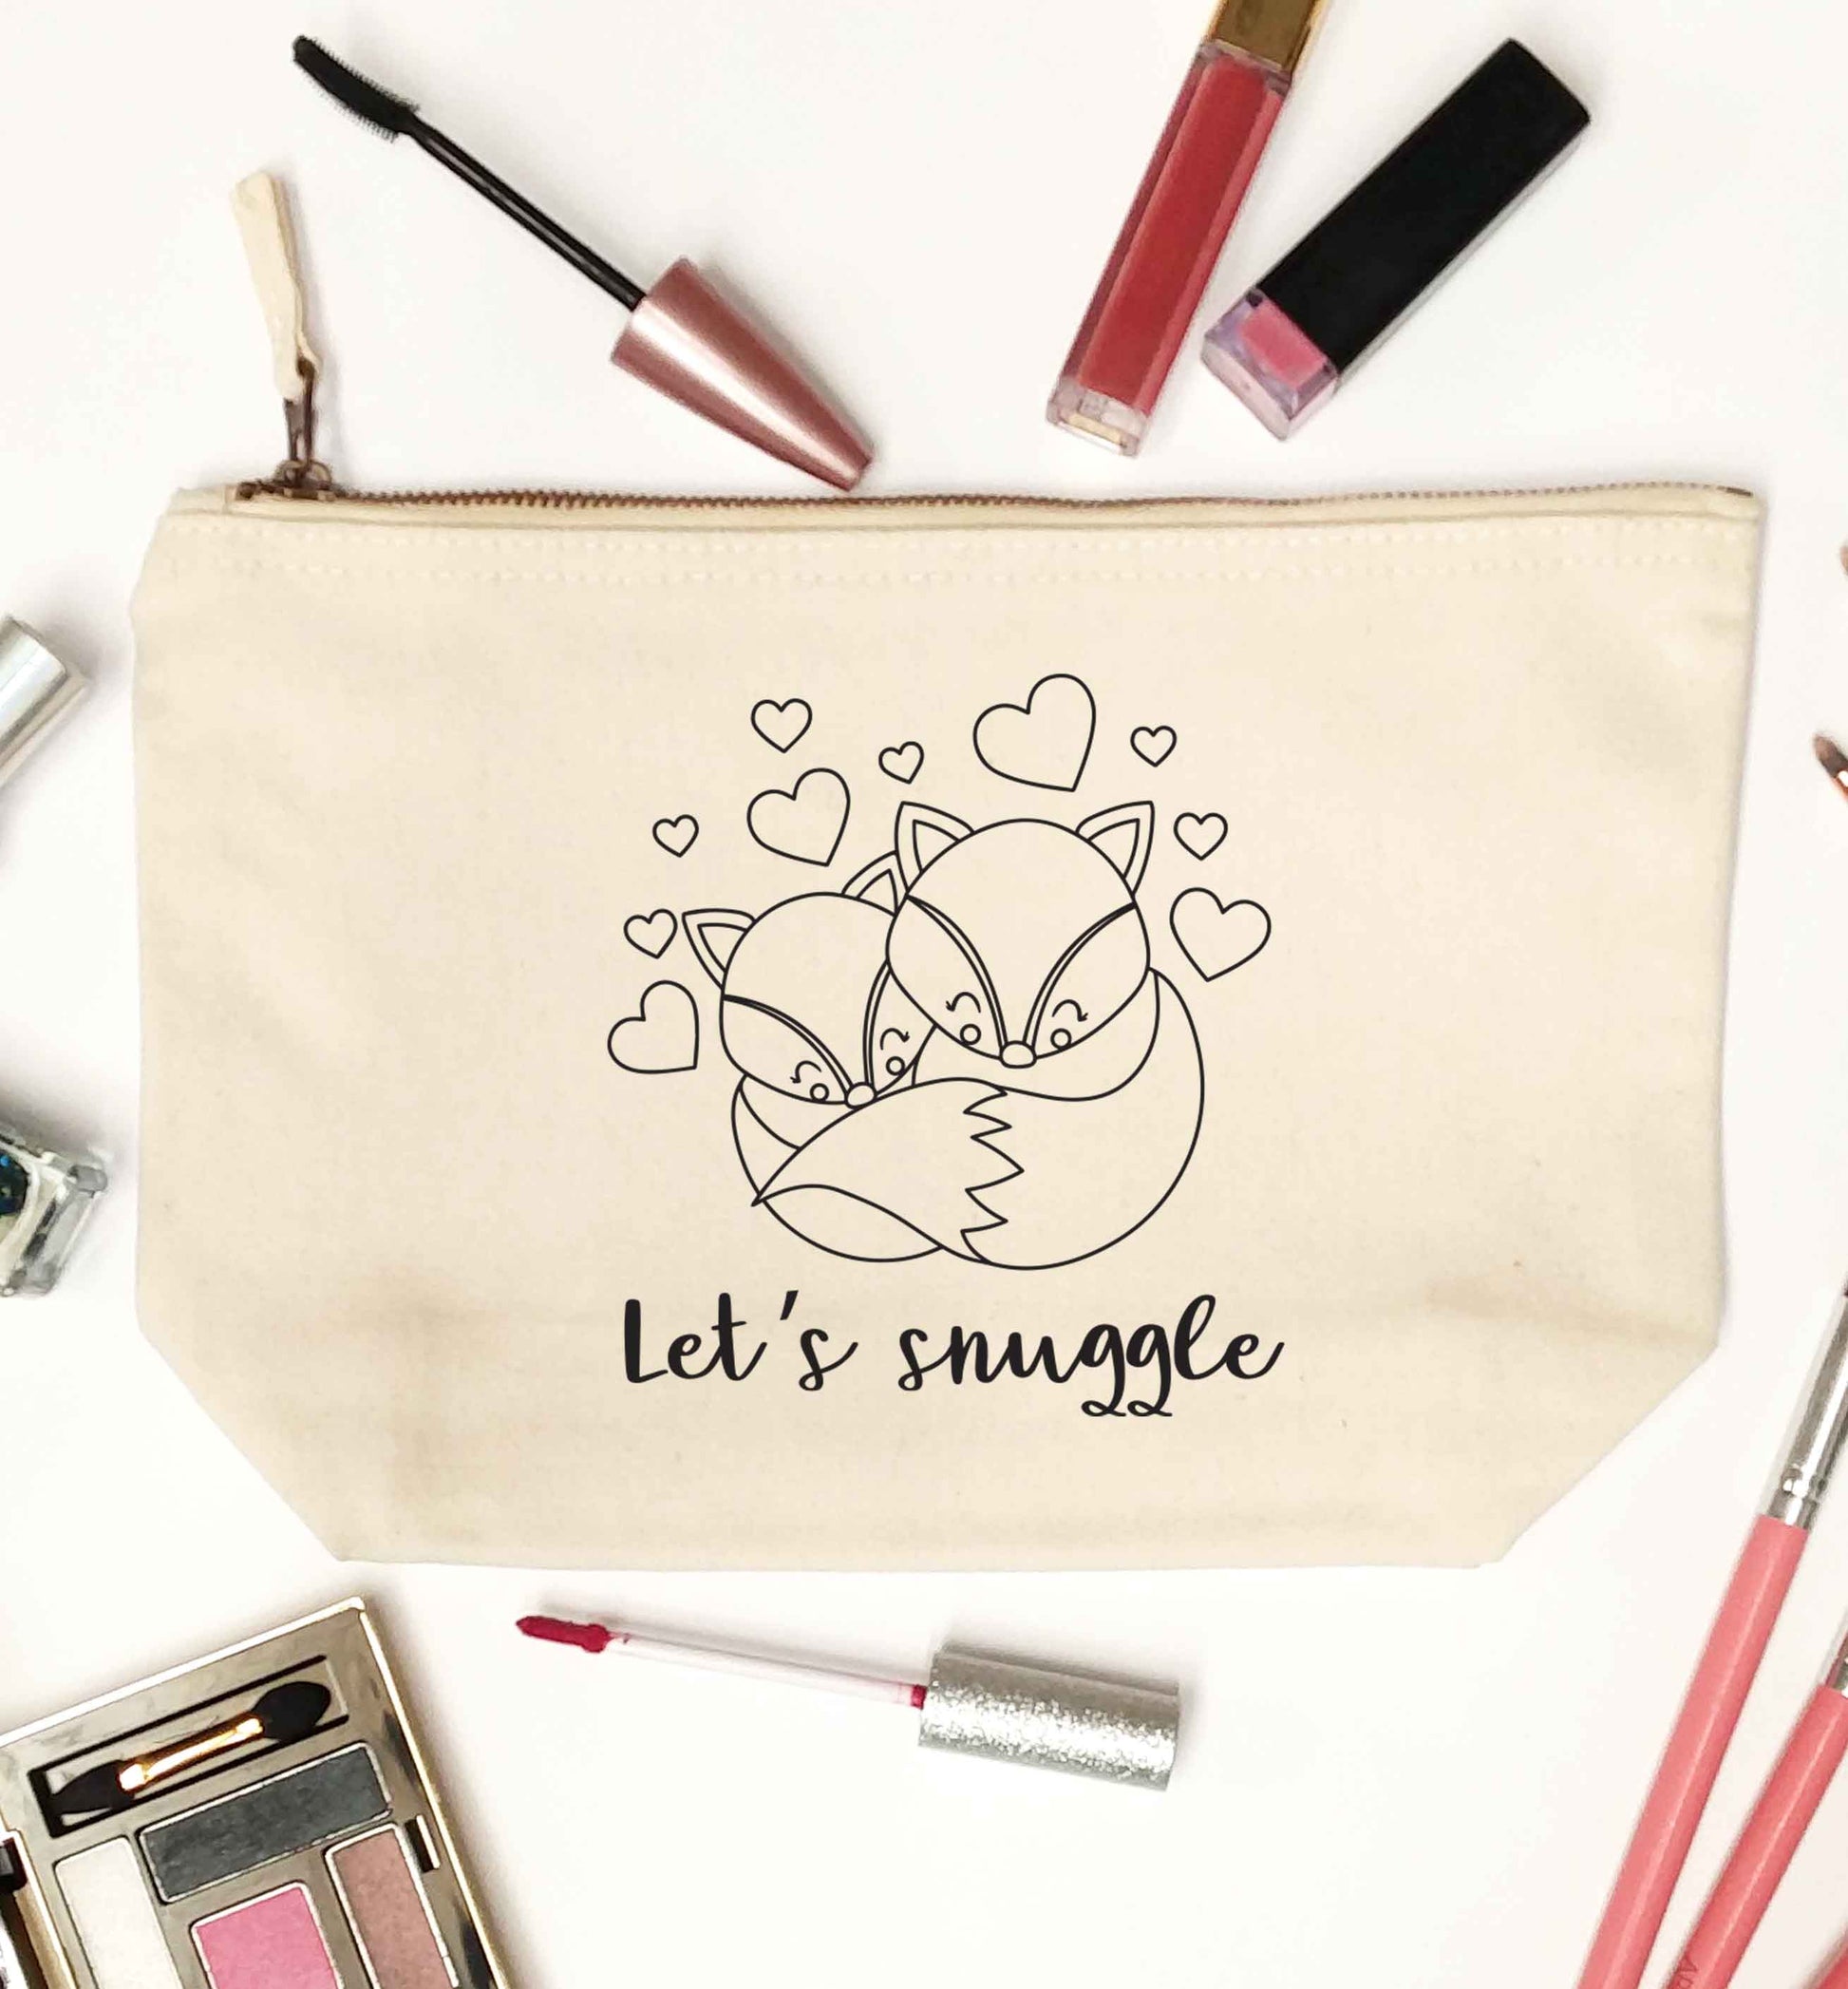 Let's snuggle natural makeup bag